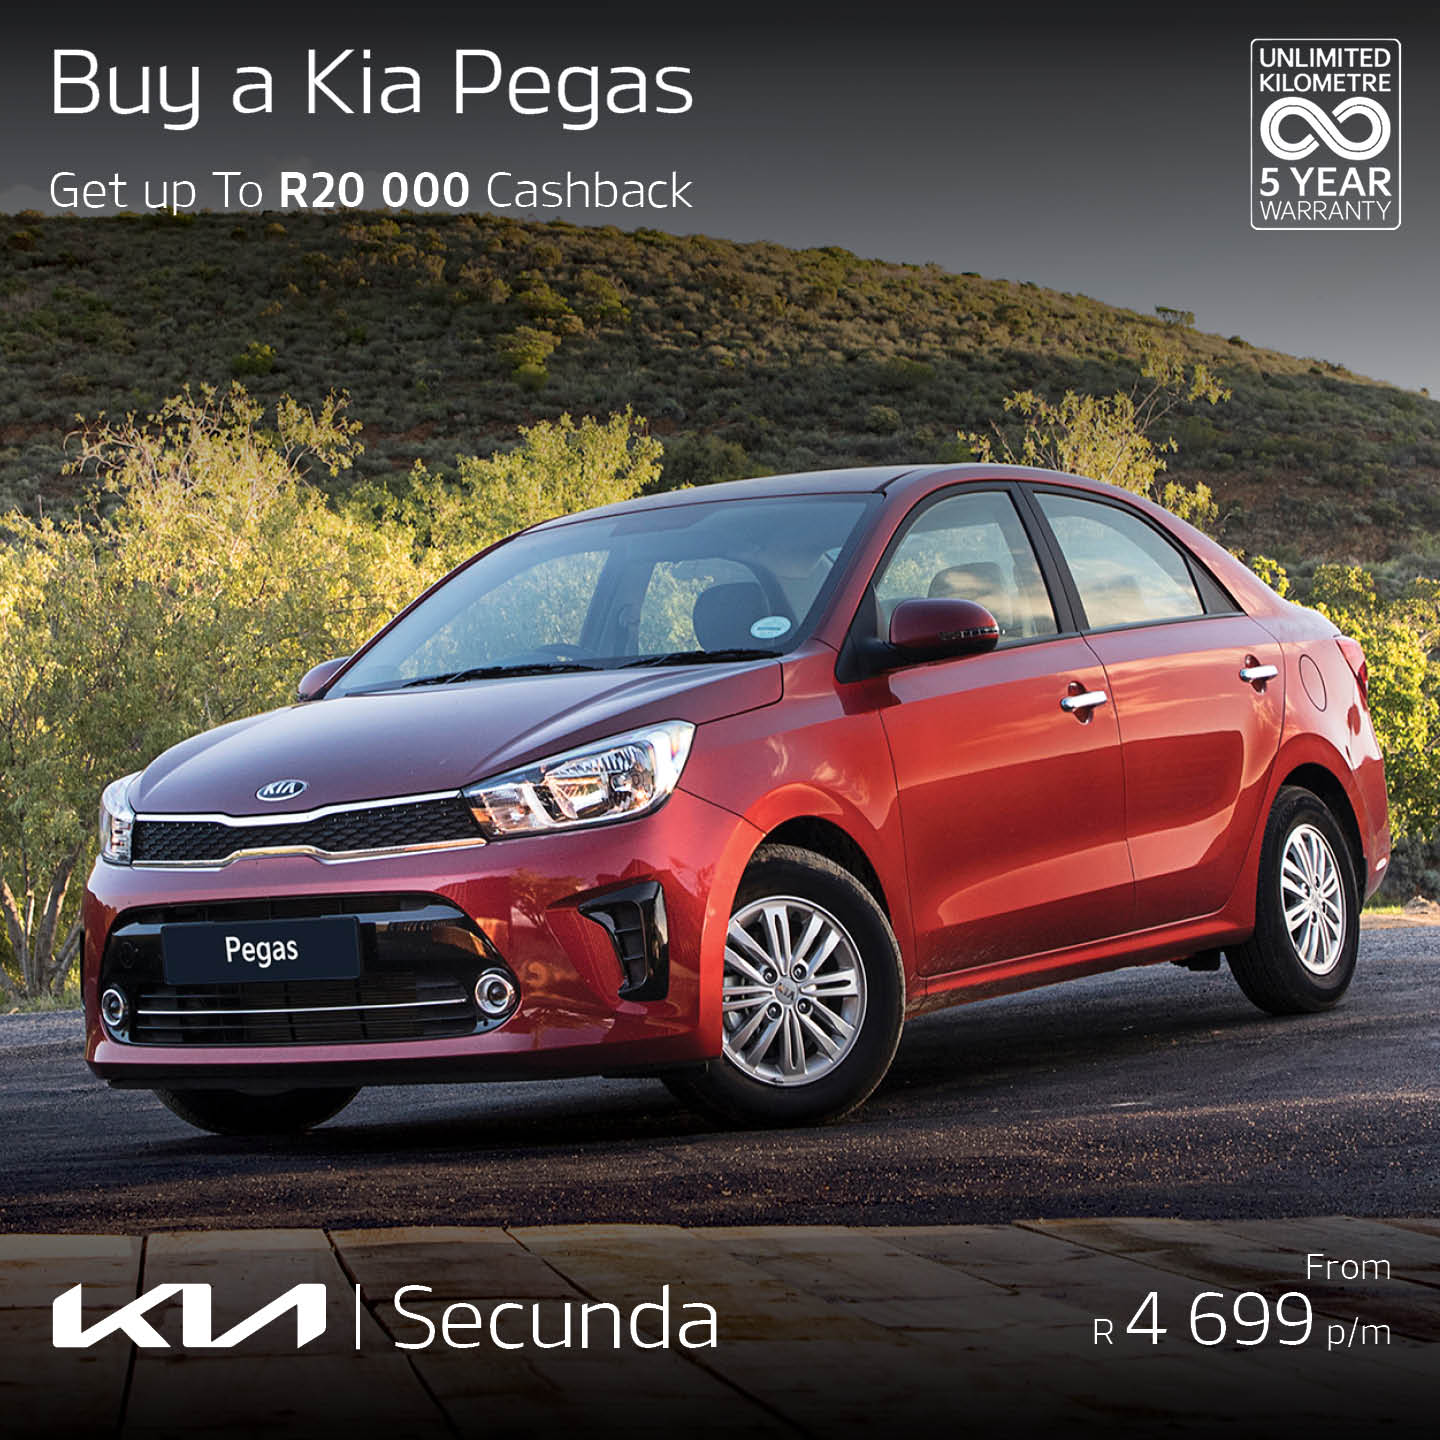 Buy a KIA Pegas image from 